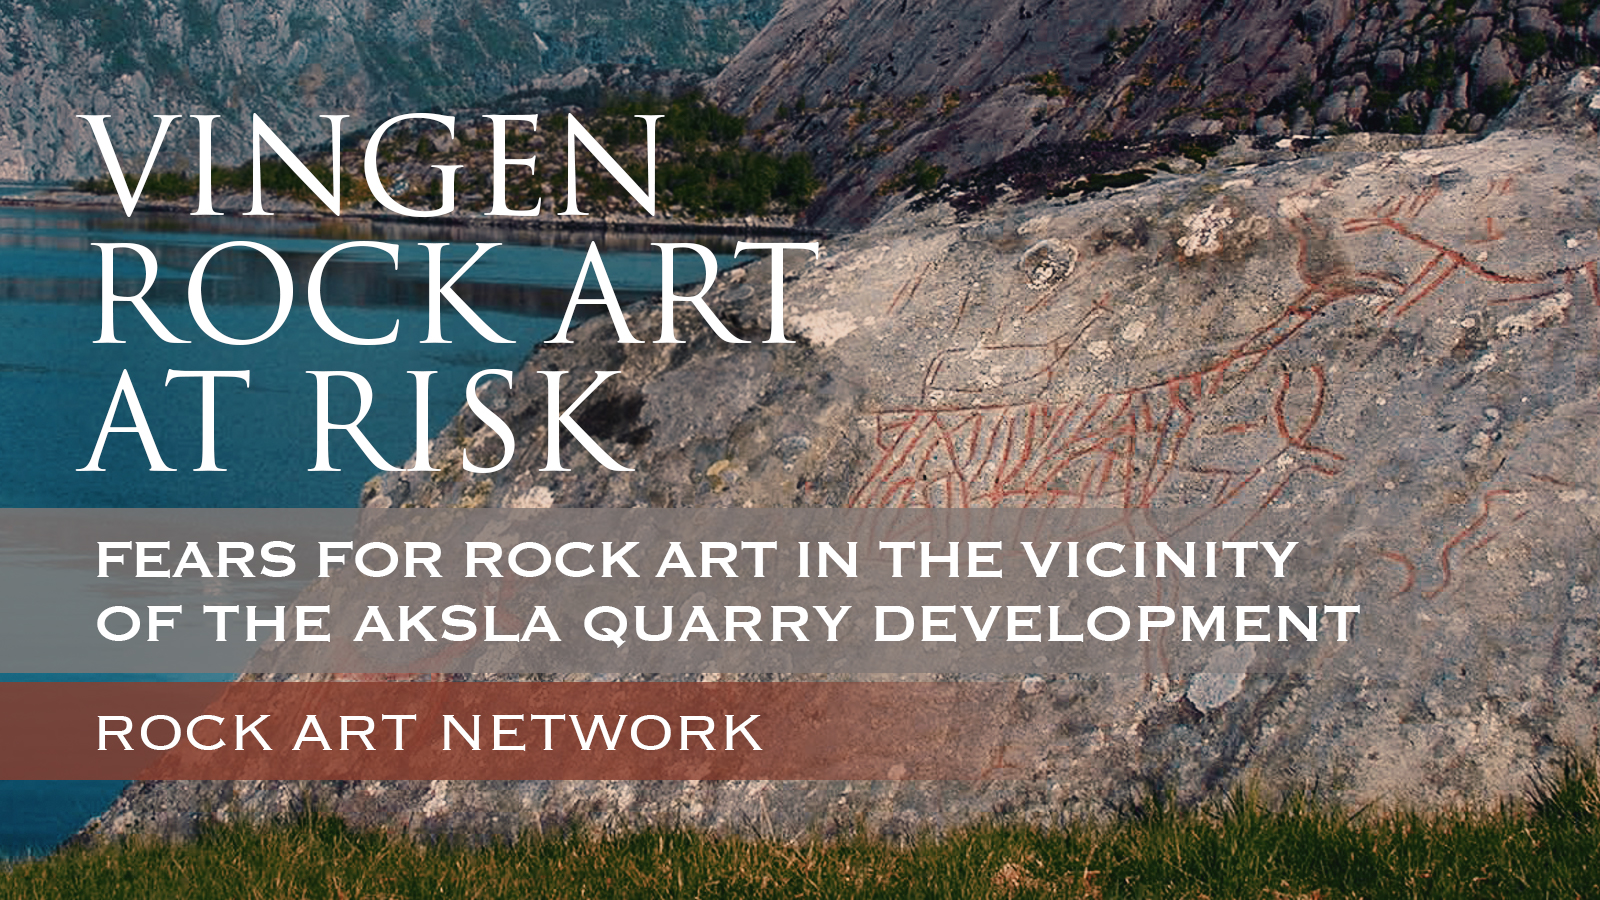 Norway Vingen rock art petroglyphs at risk